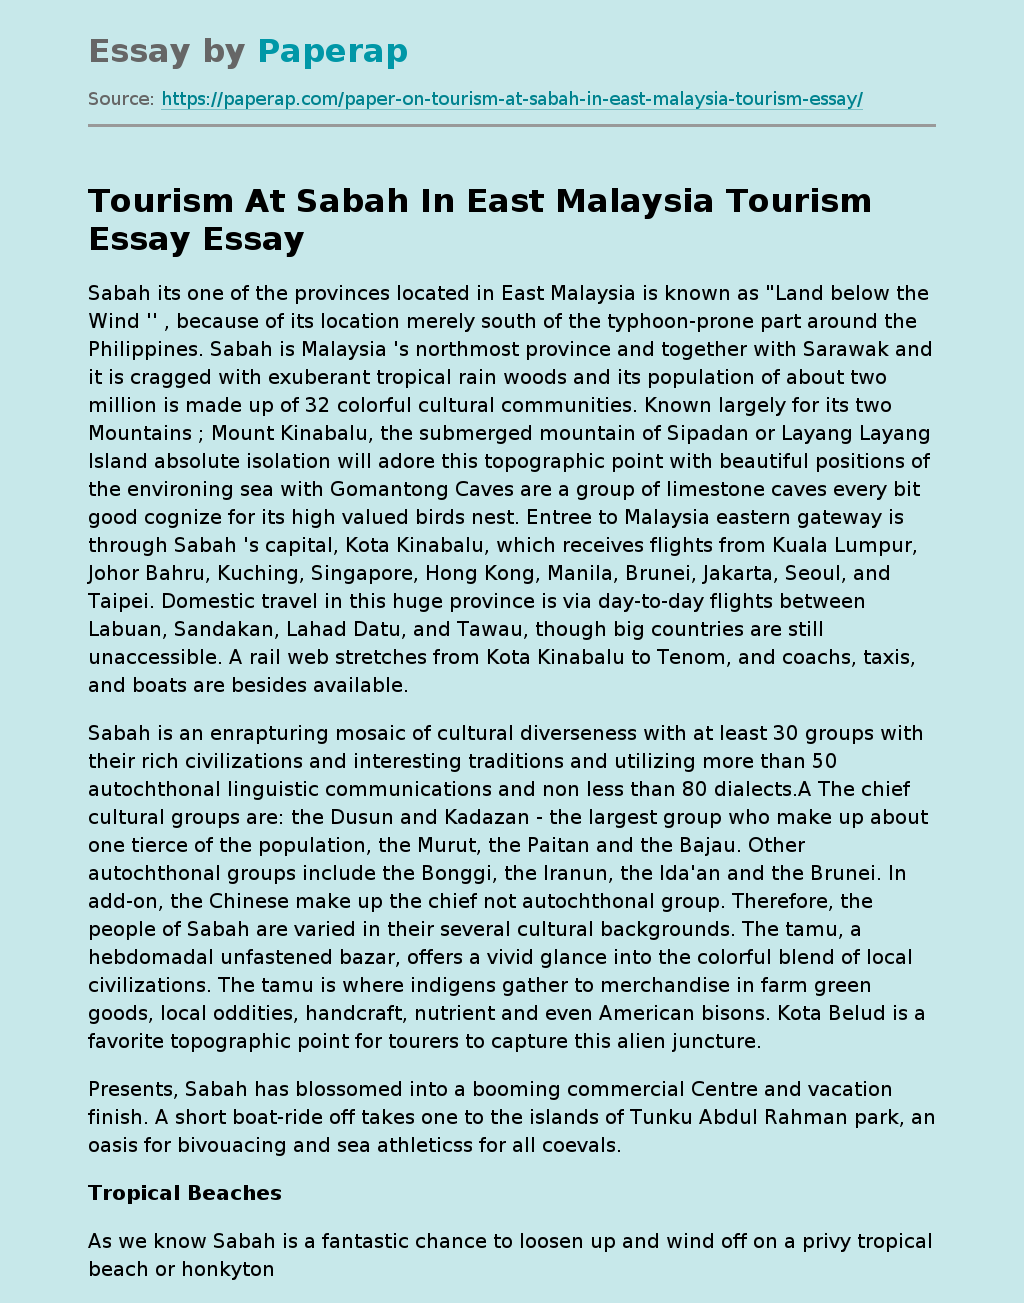 Tourism At Sabah In East Malaysia Tourism Essay